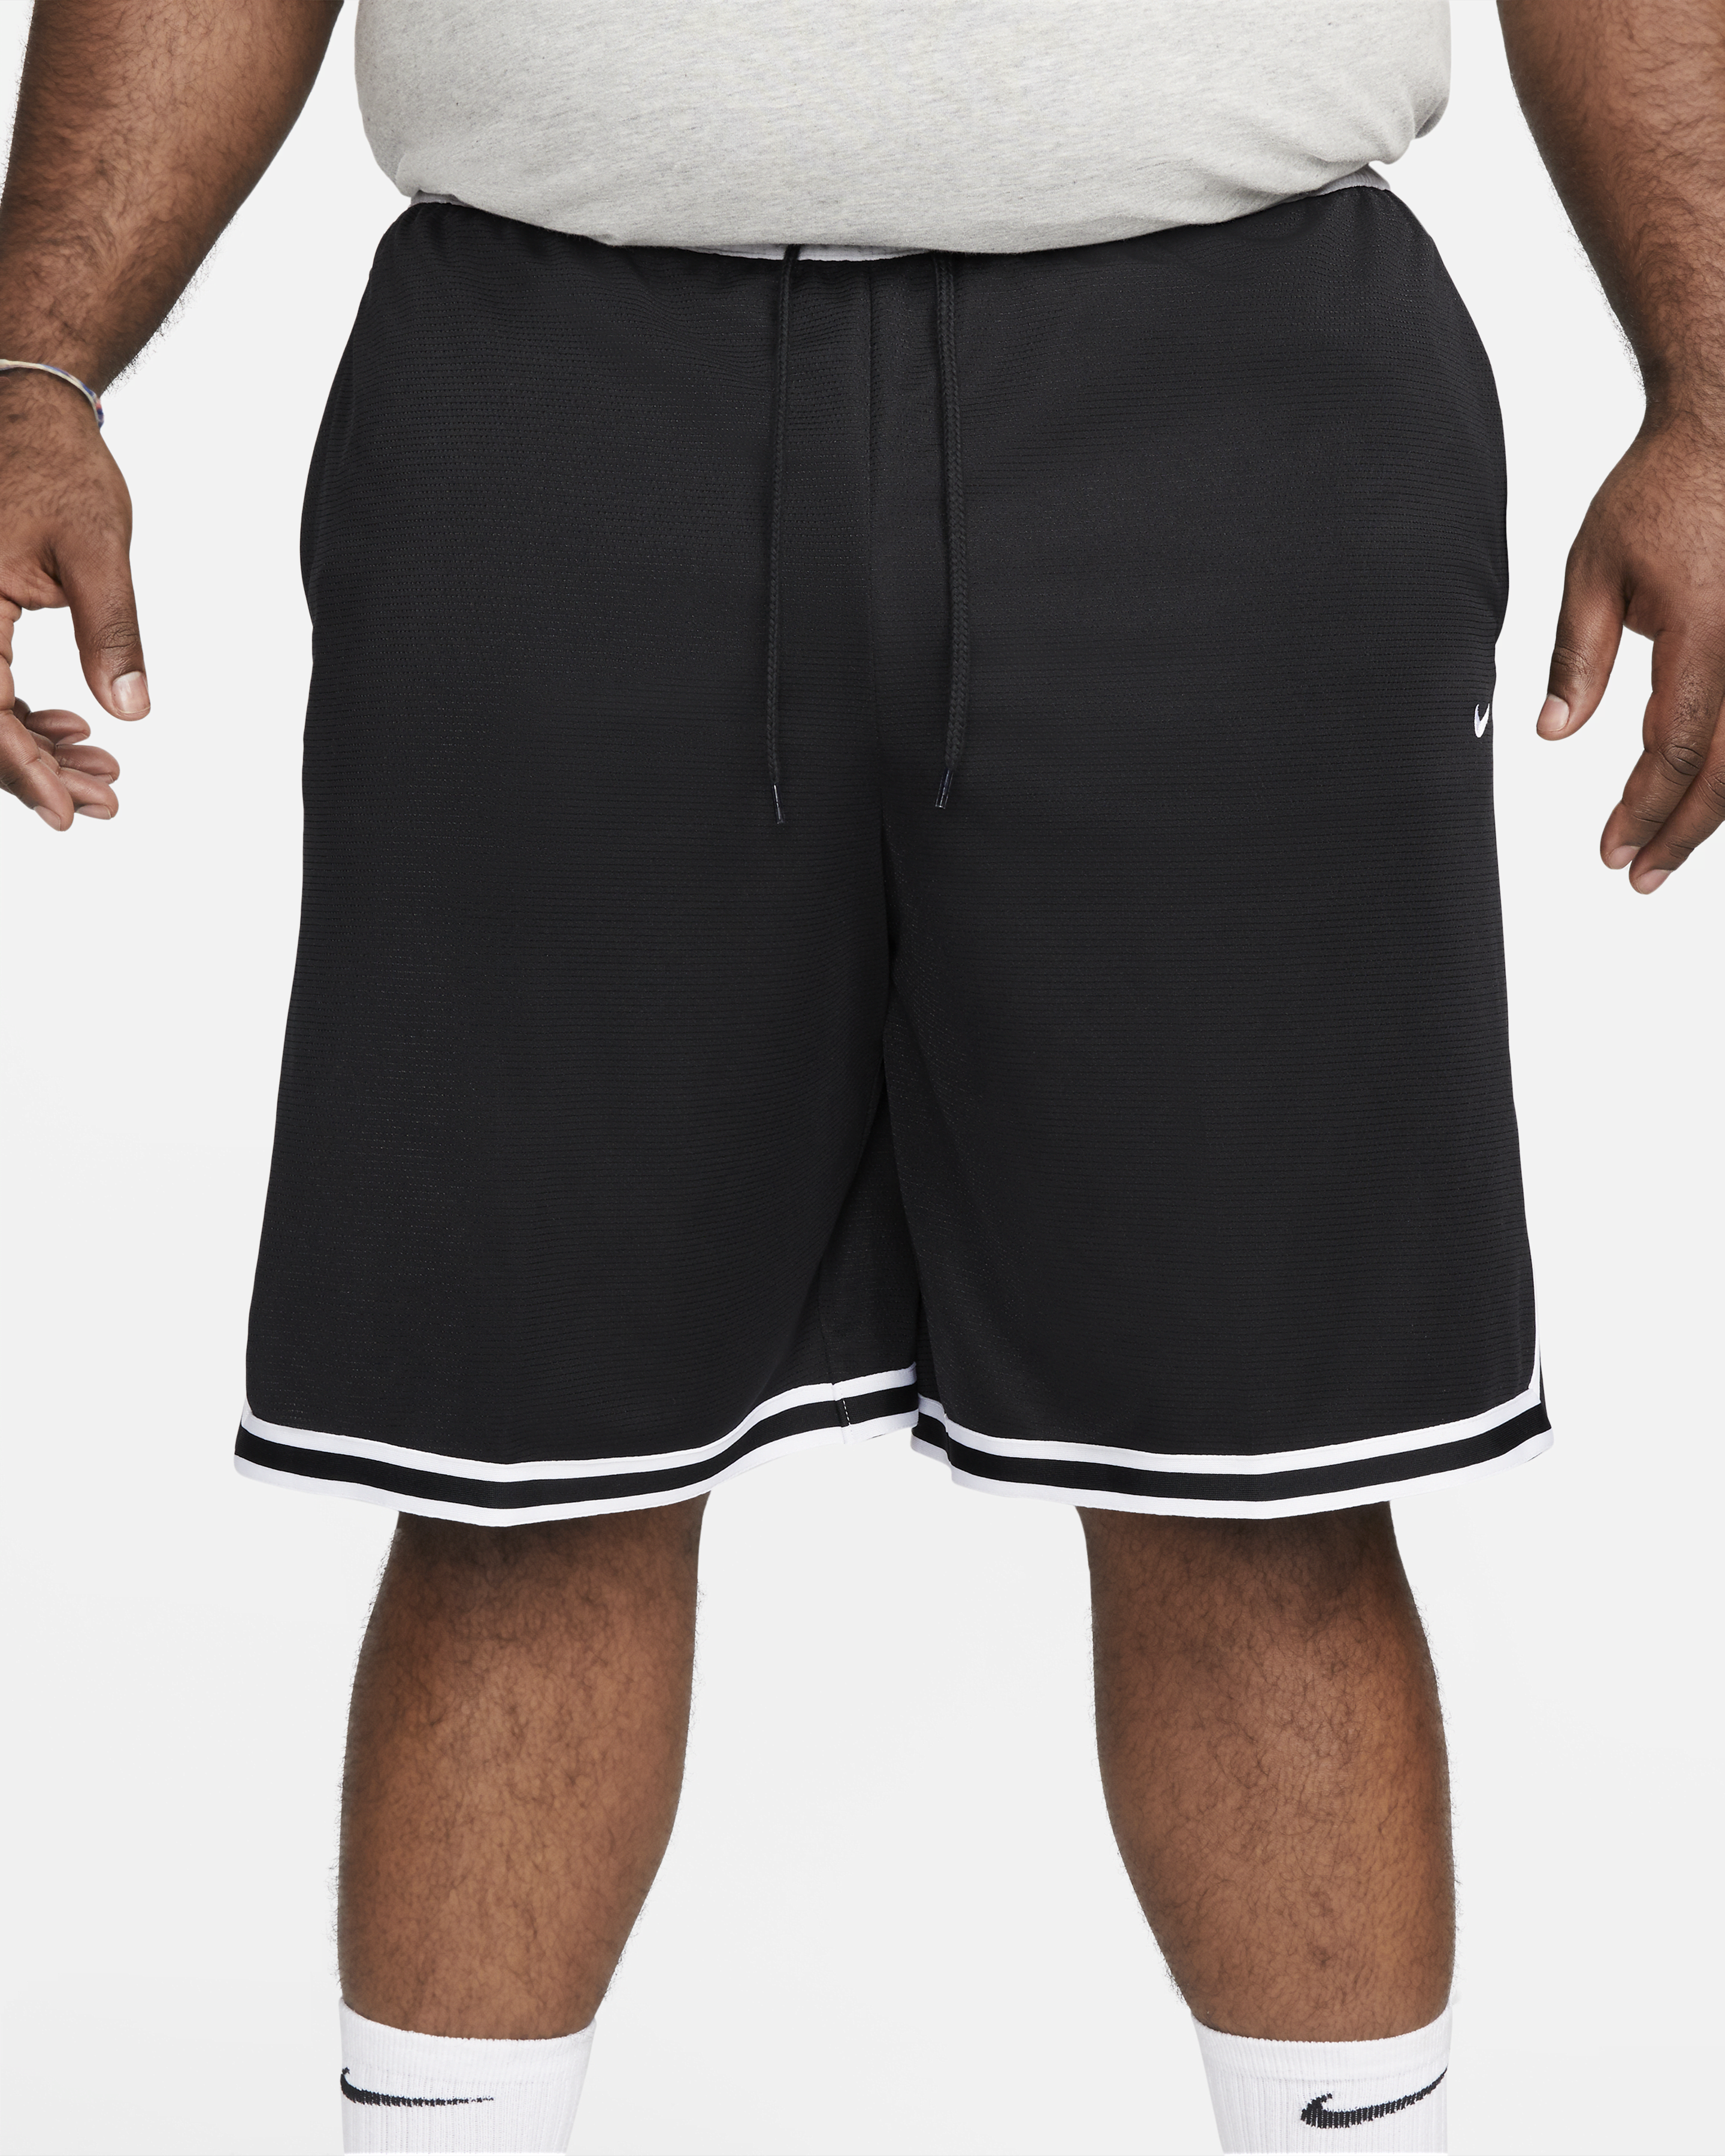 Shop USA Nike (Road) Men's Basketball Shorts